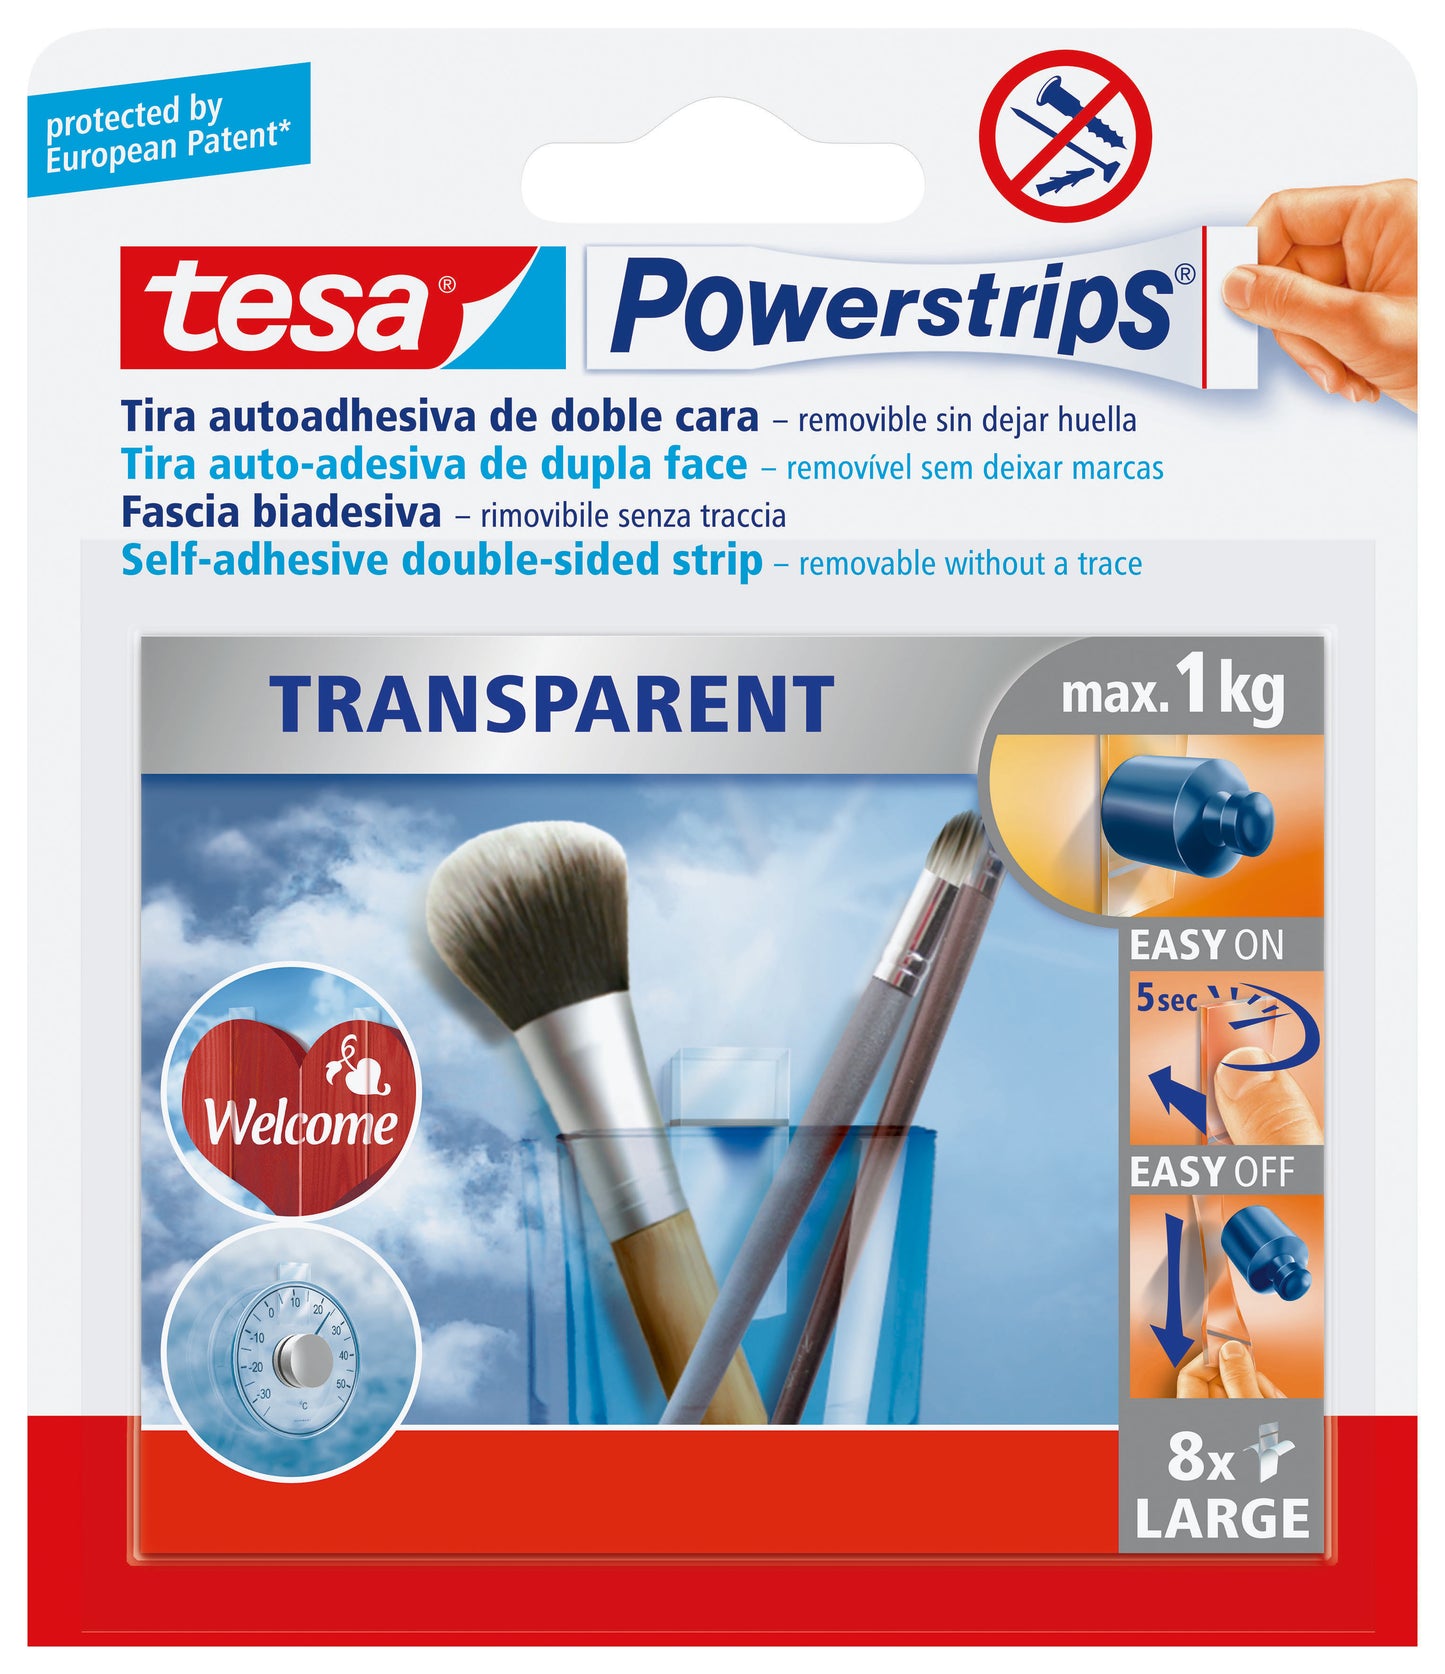 Tesa powerstrips 8 strisce biadesive large